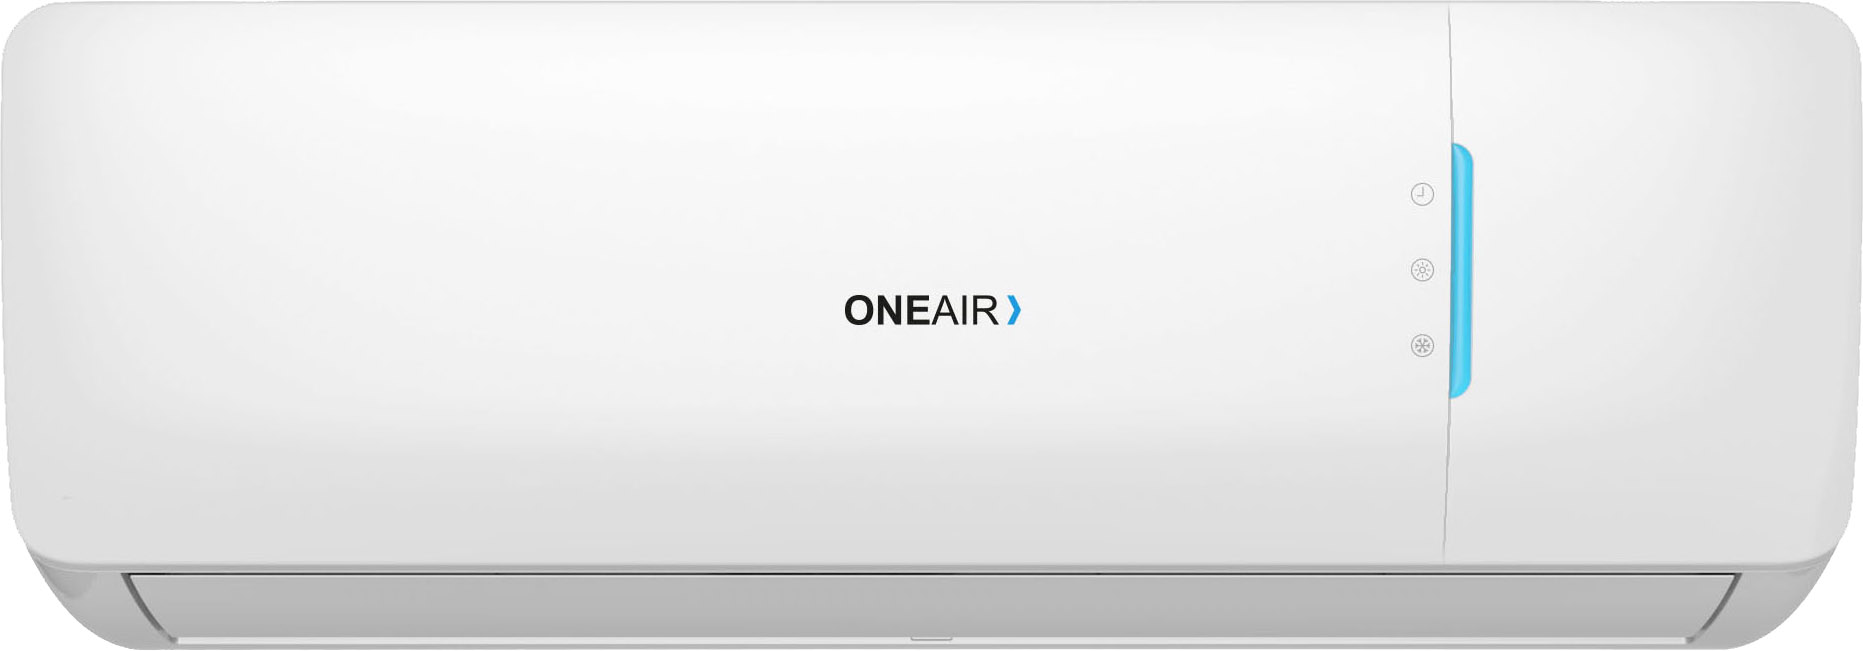 Кондиционер сплит-система OneAir OAC-09H/N1 цена 0.00 грн - фотография 2